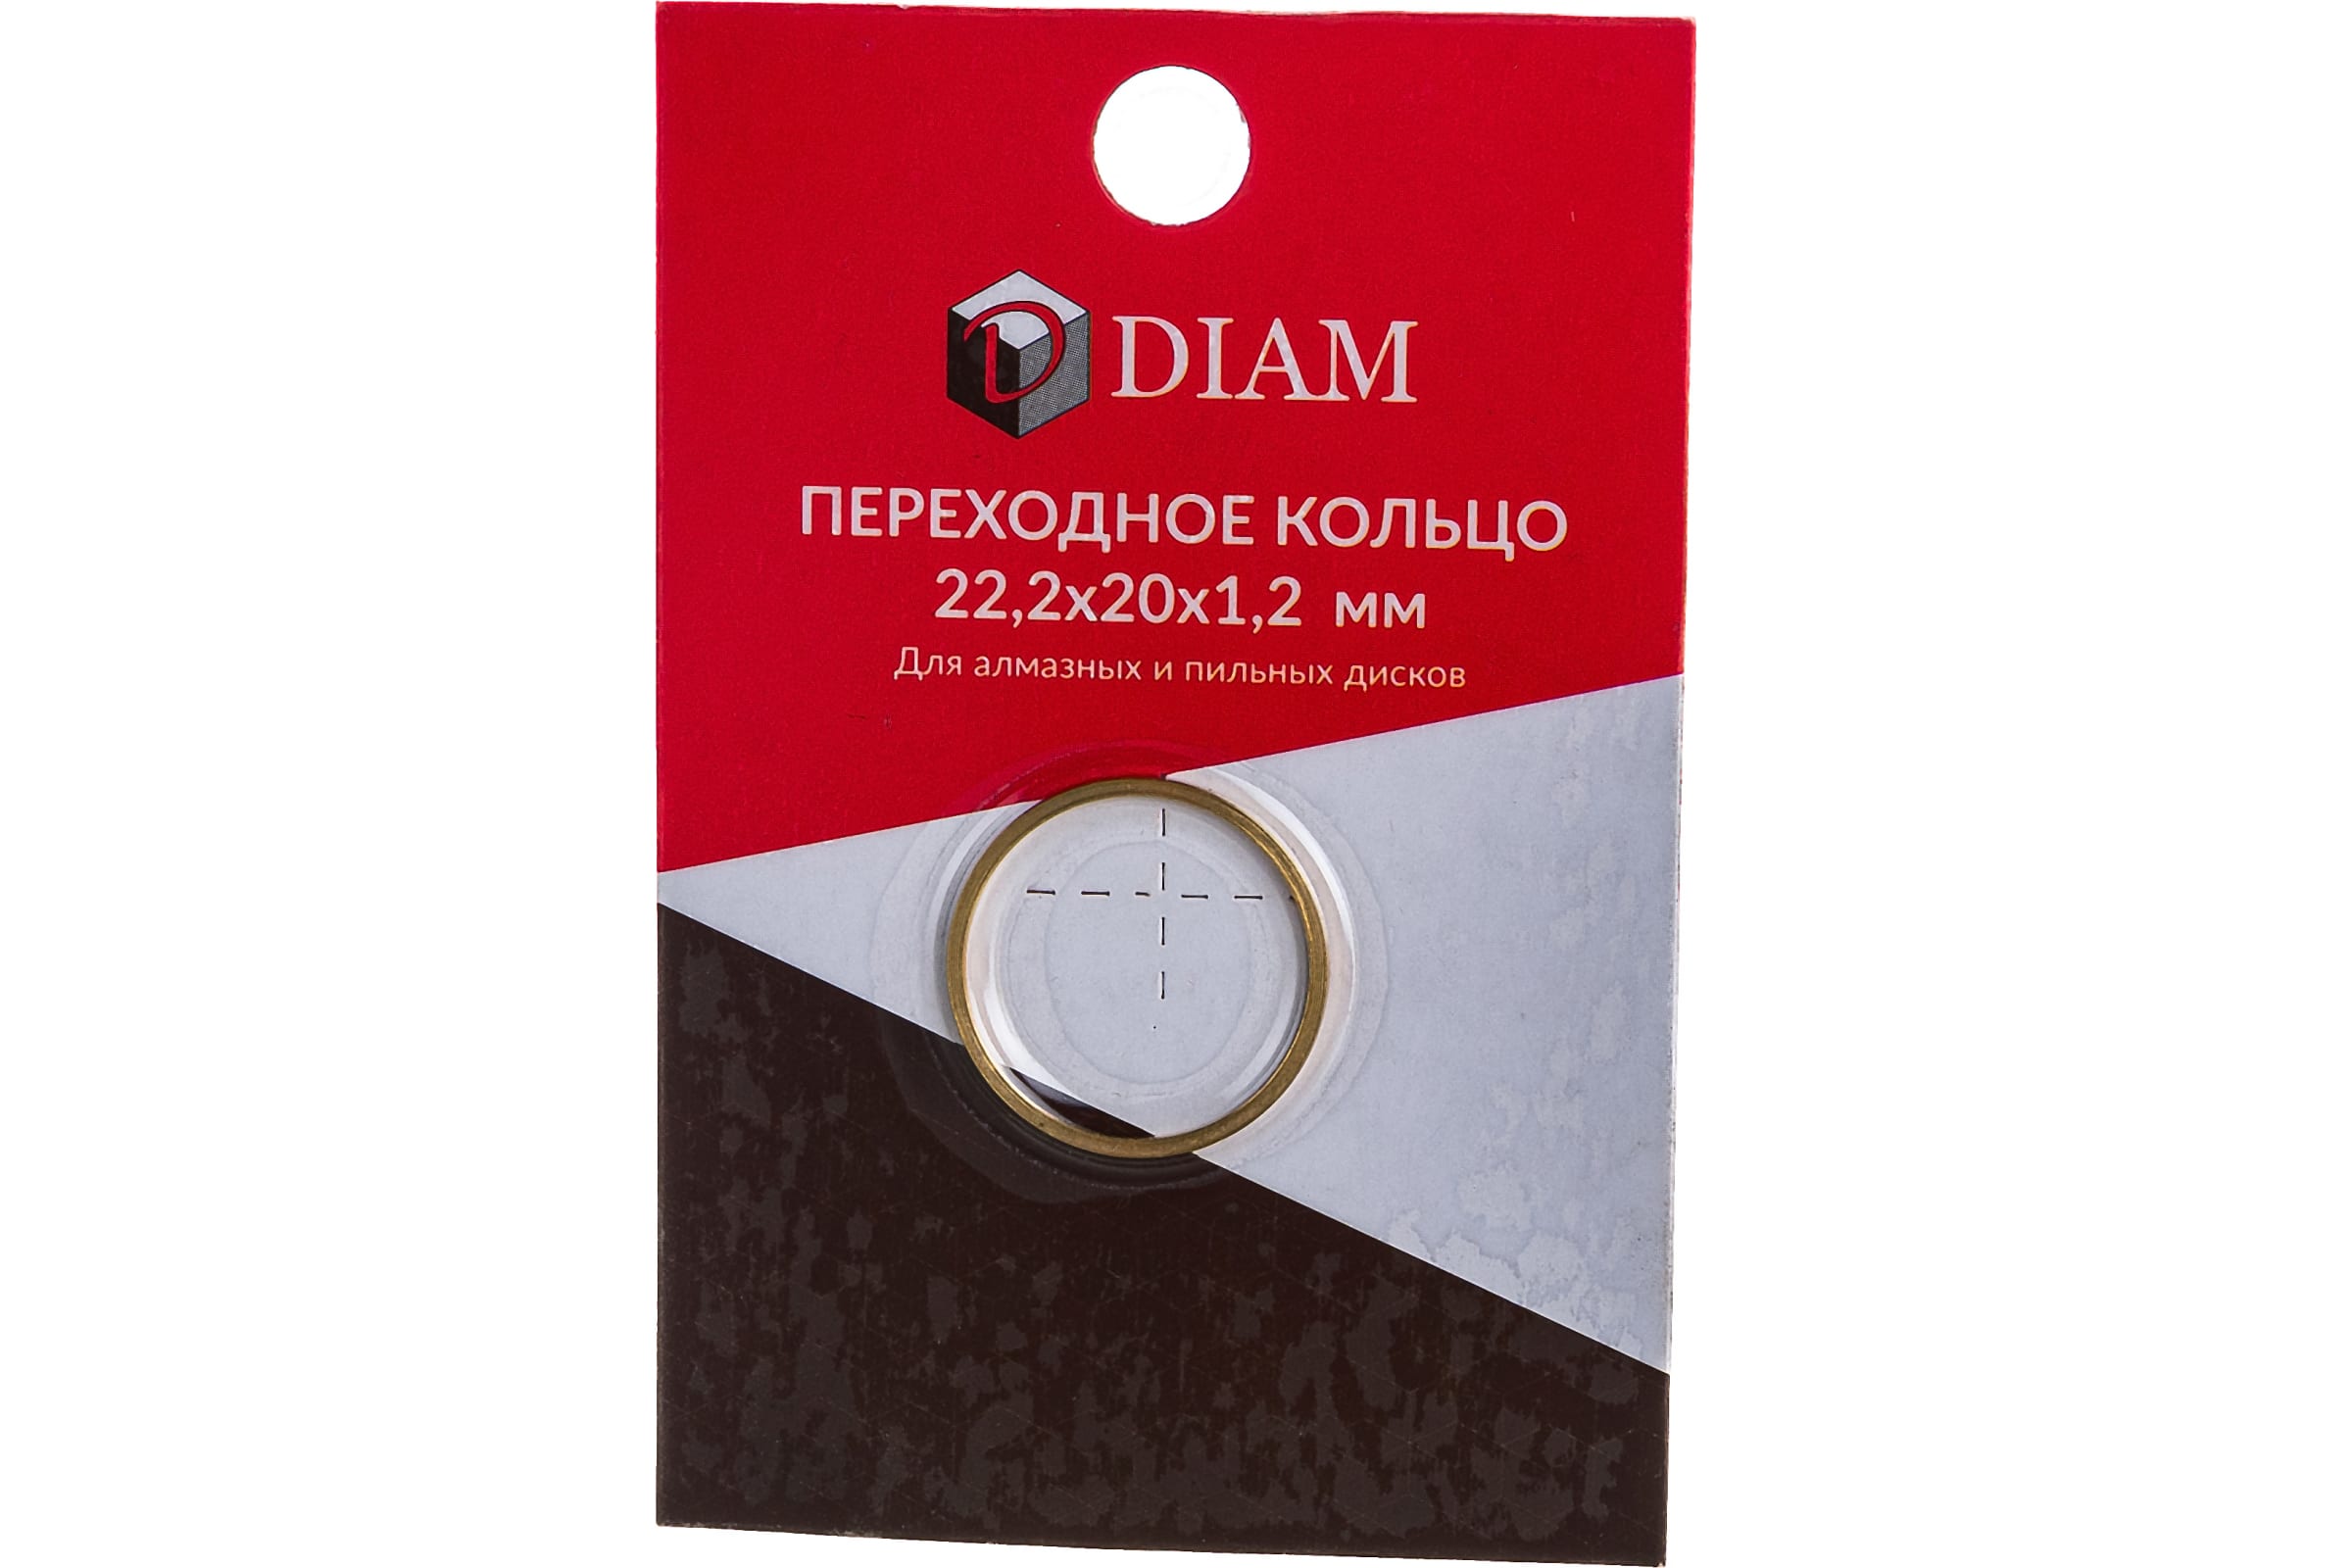 DIAM Переходное кольцо 22,2х20х1,2 640082 переходное кольцо атака